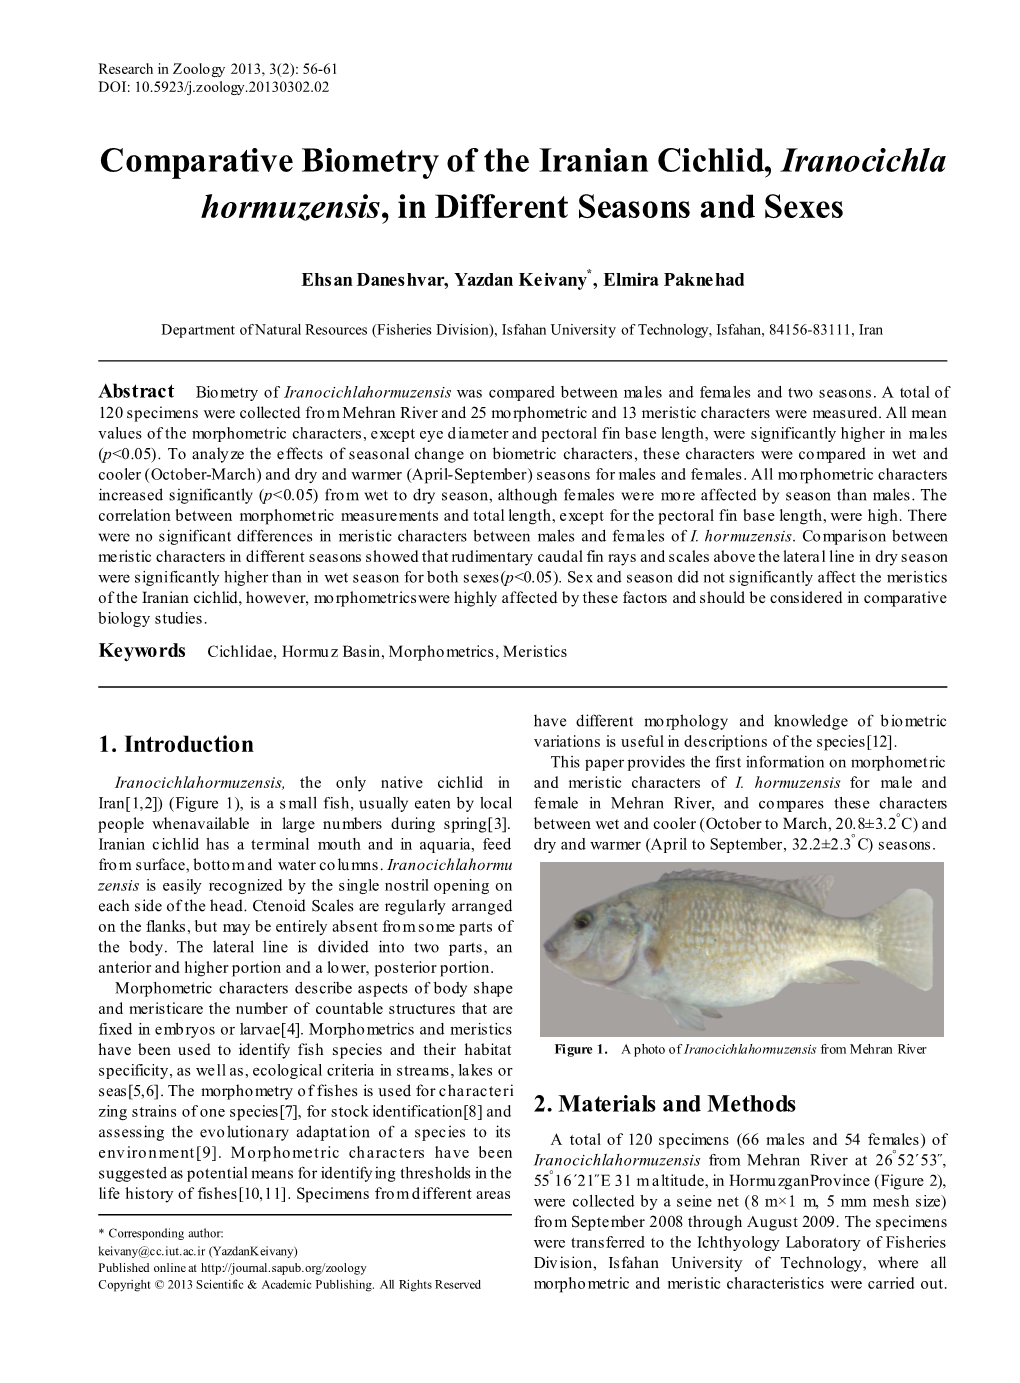 Cichlidae, Hormuz Basin, Morphometrics, Meristics